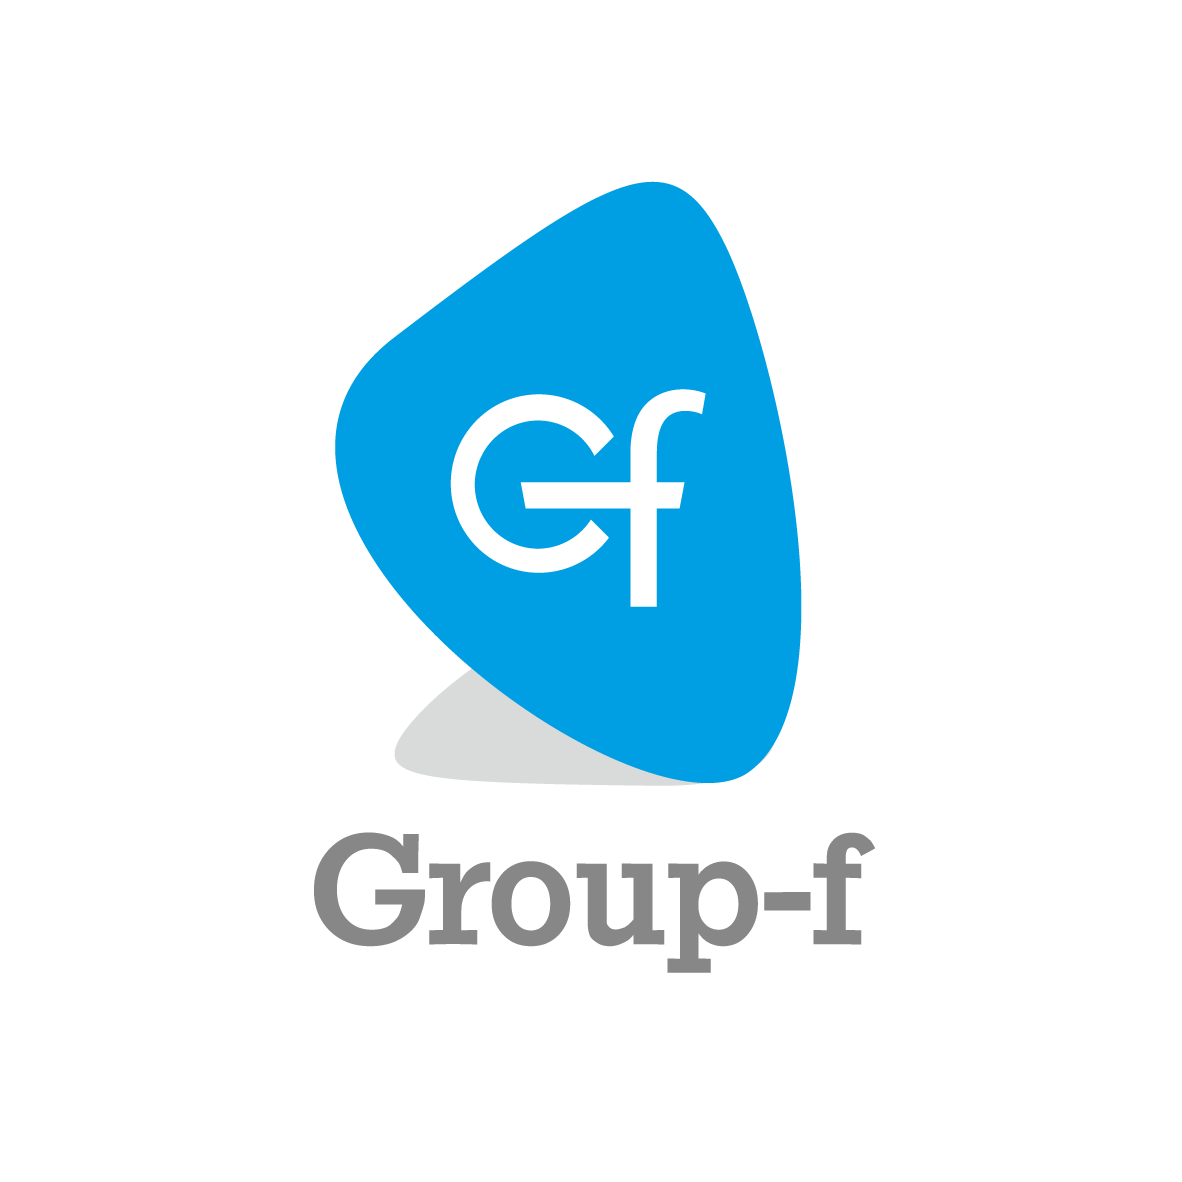 C f group. A3f Group.